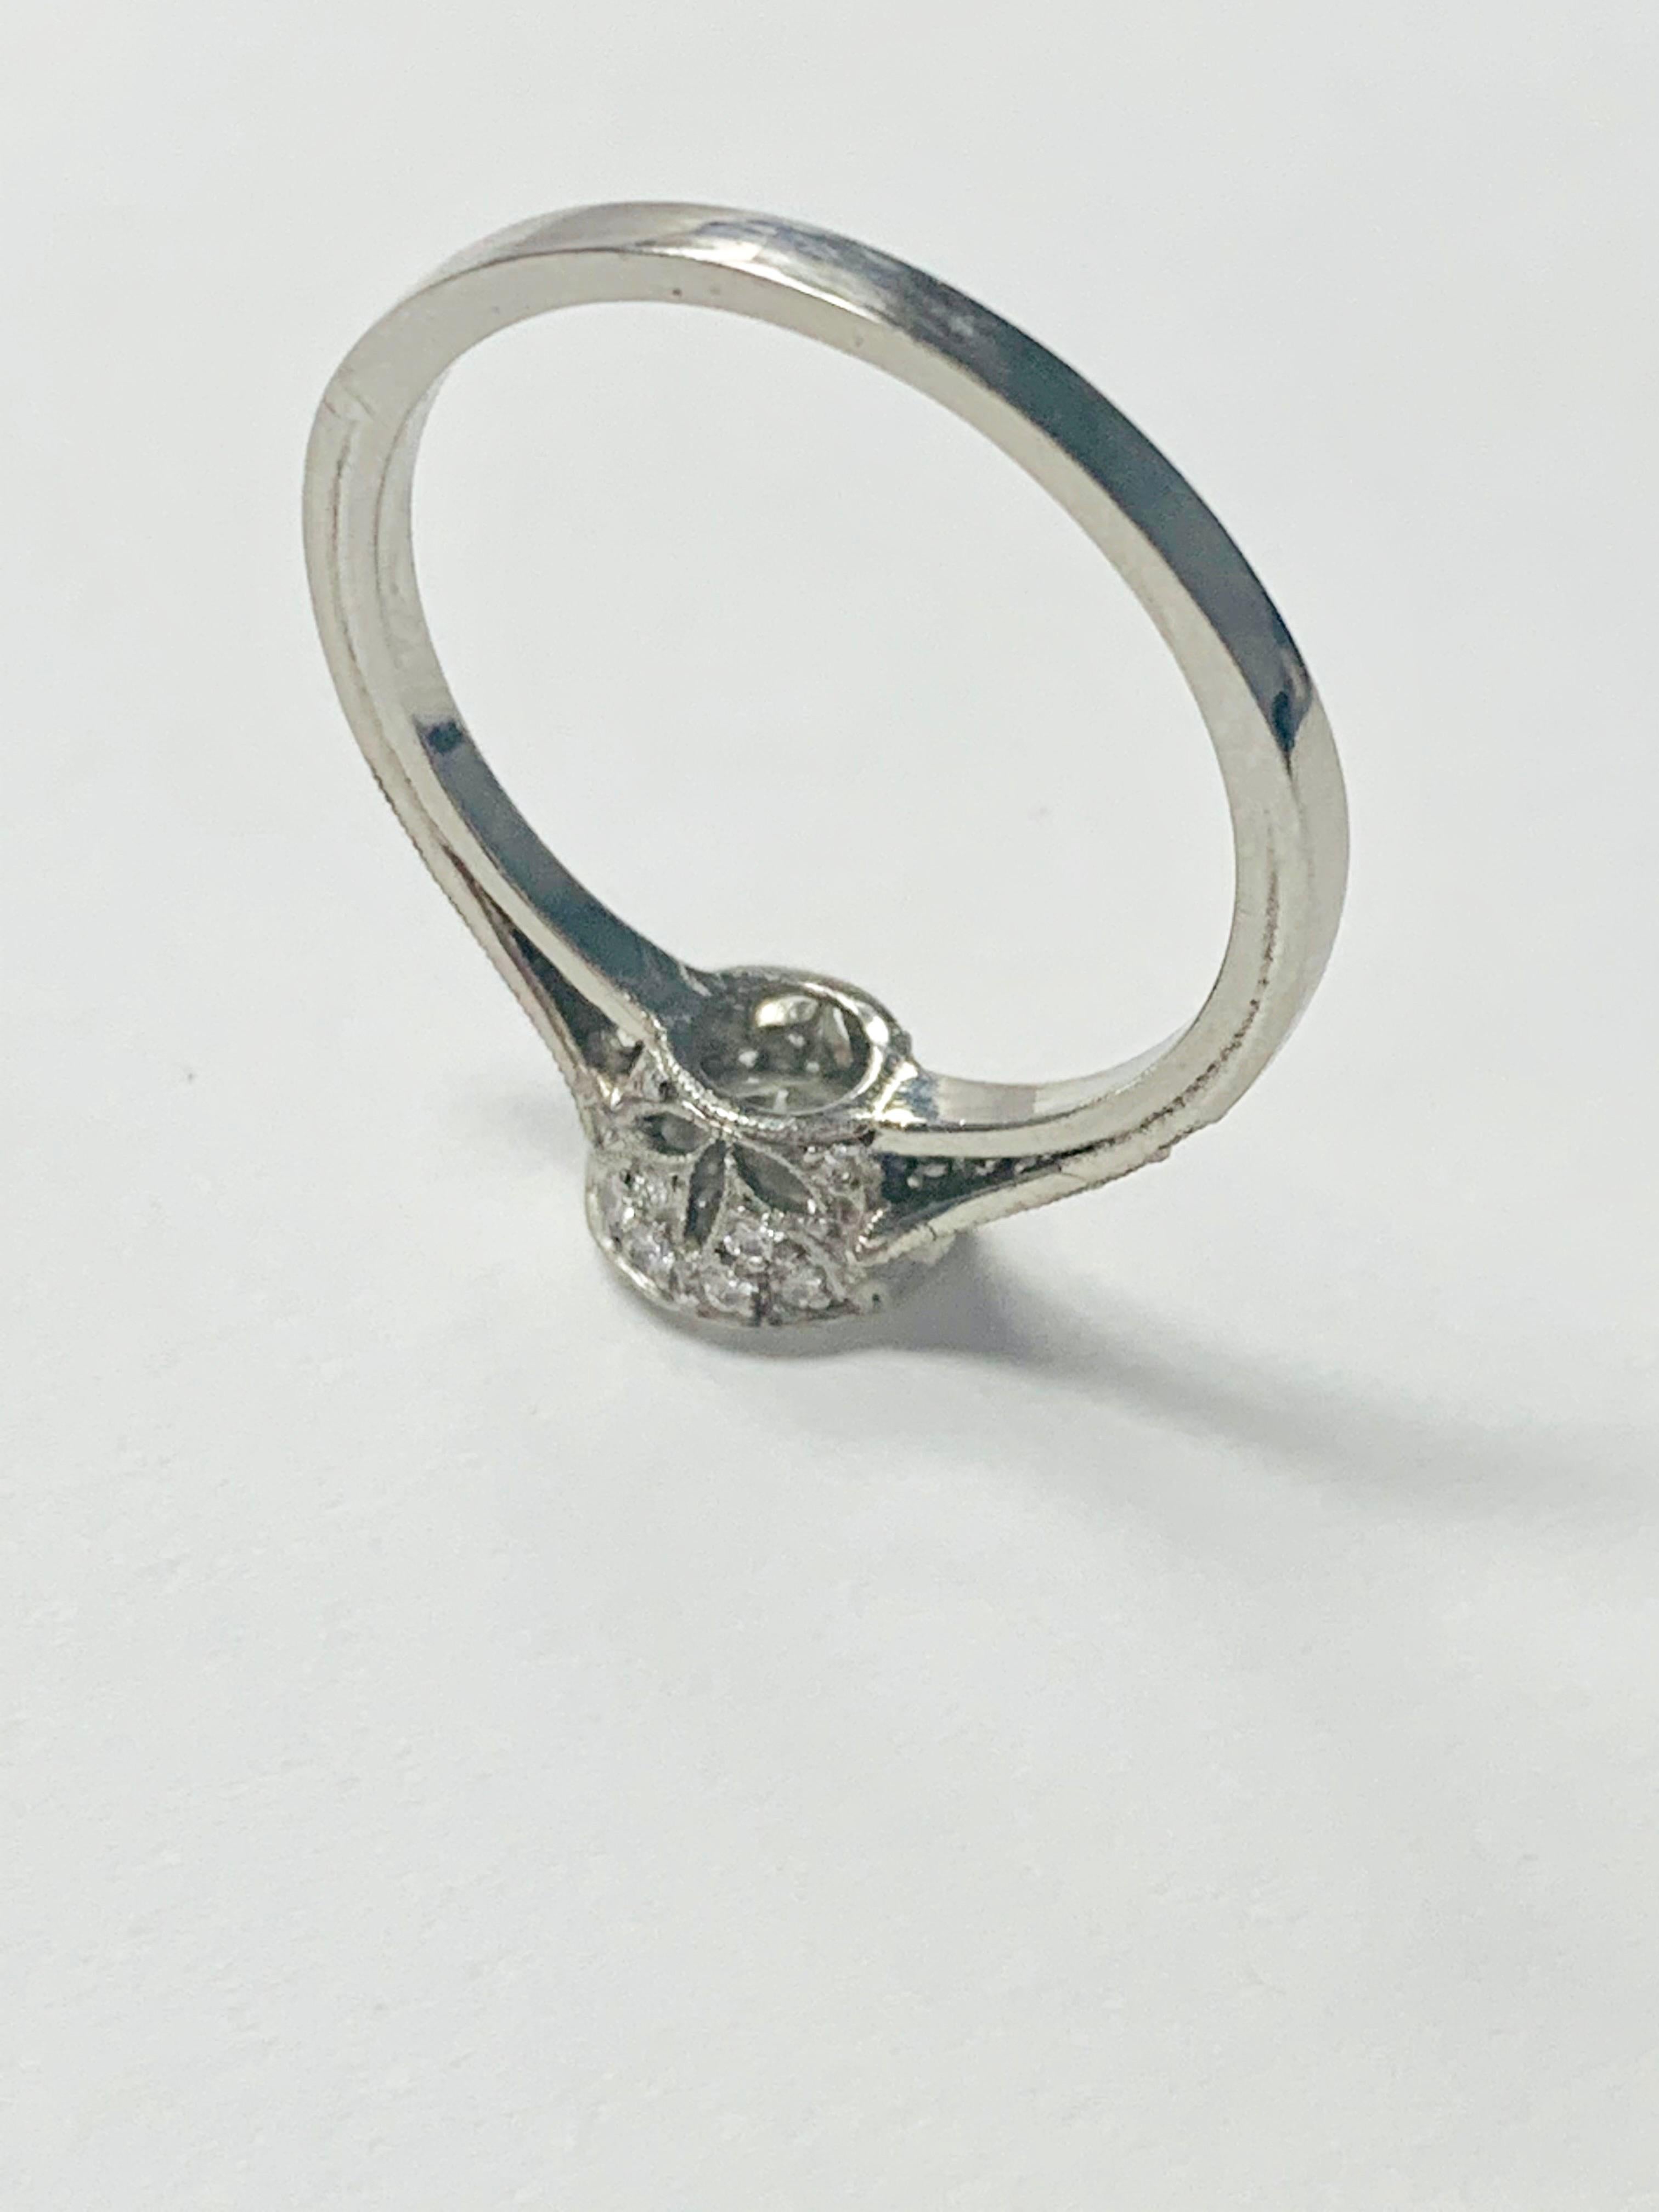 Round Cut Old European Cut Diamond Engagement Ring in Platinum For Sale